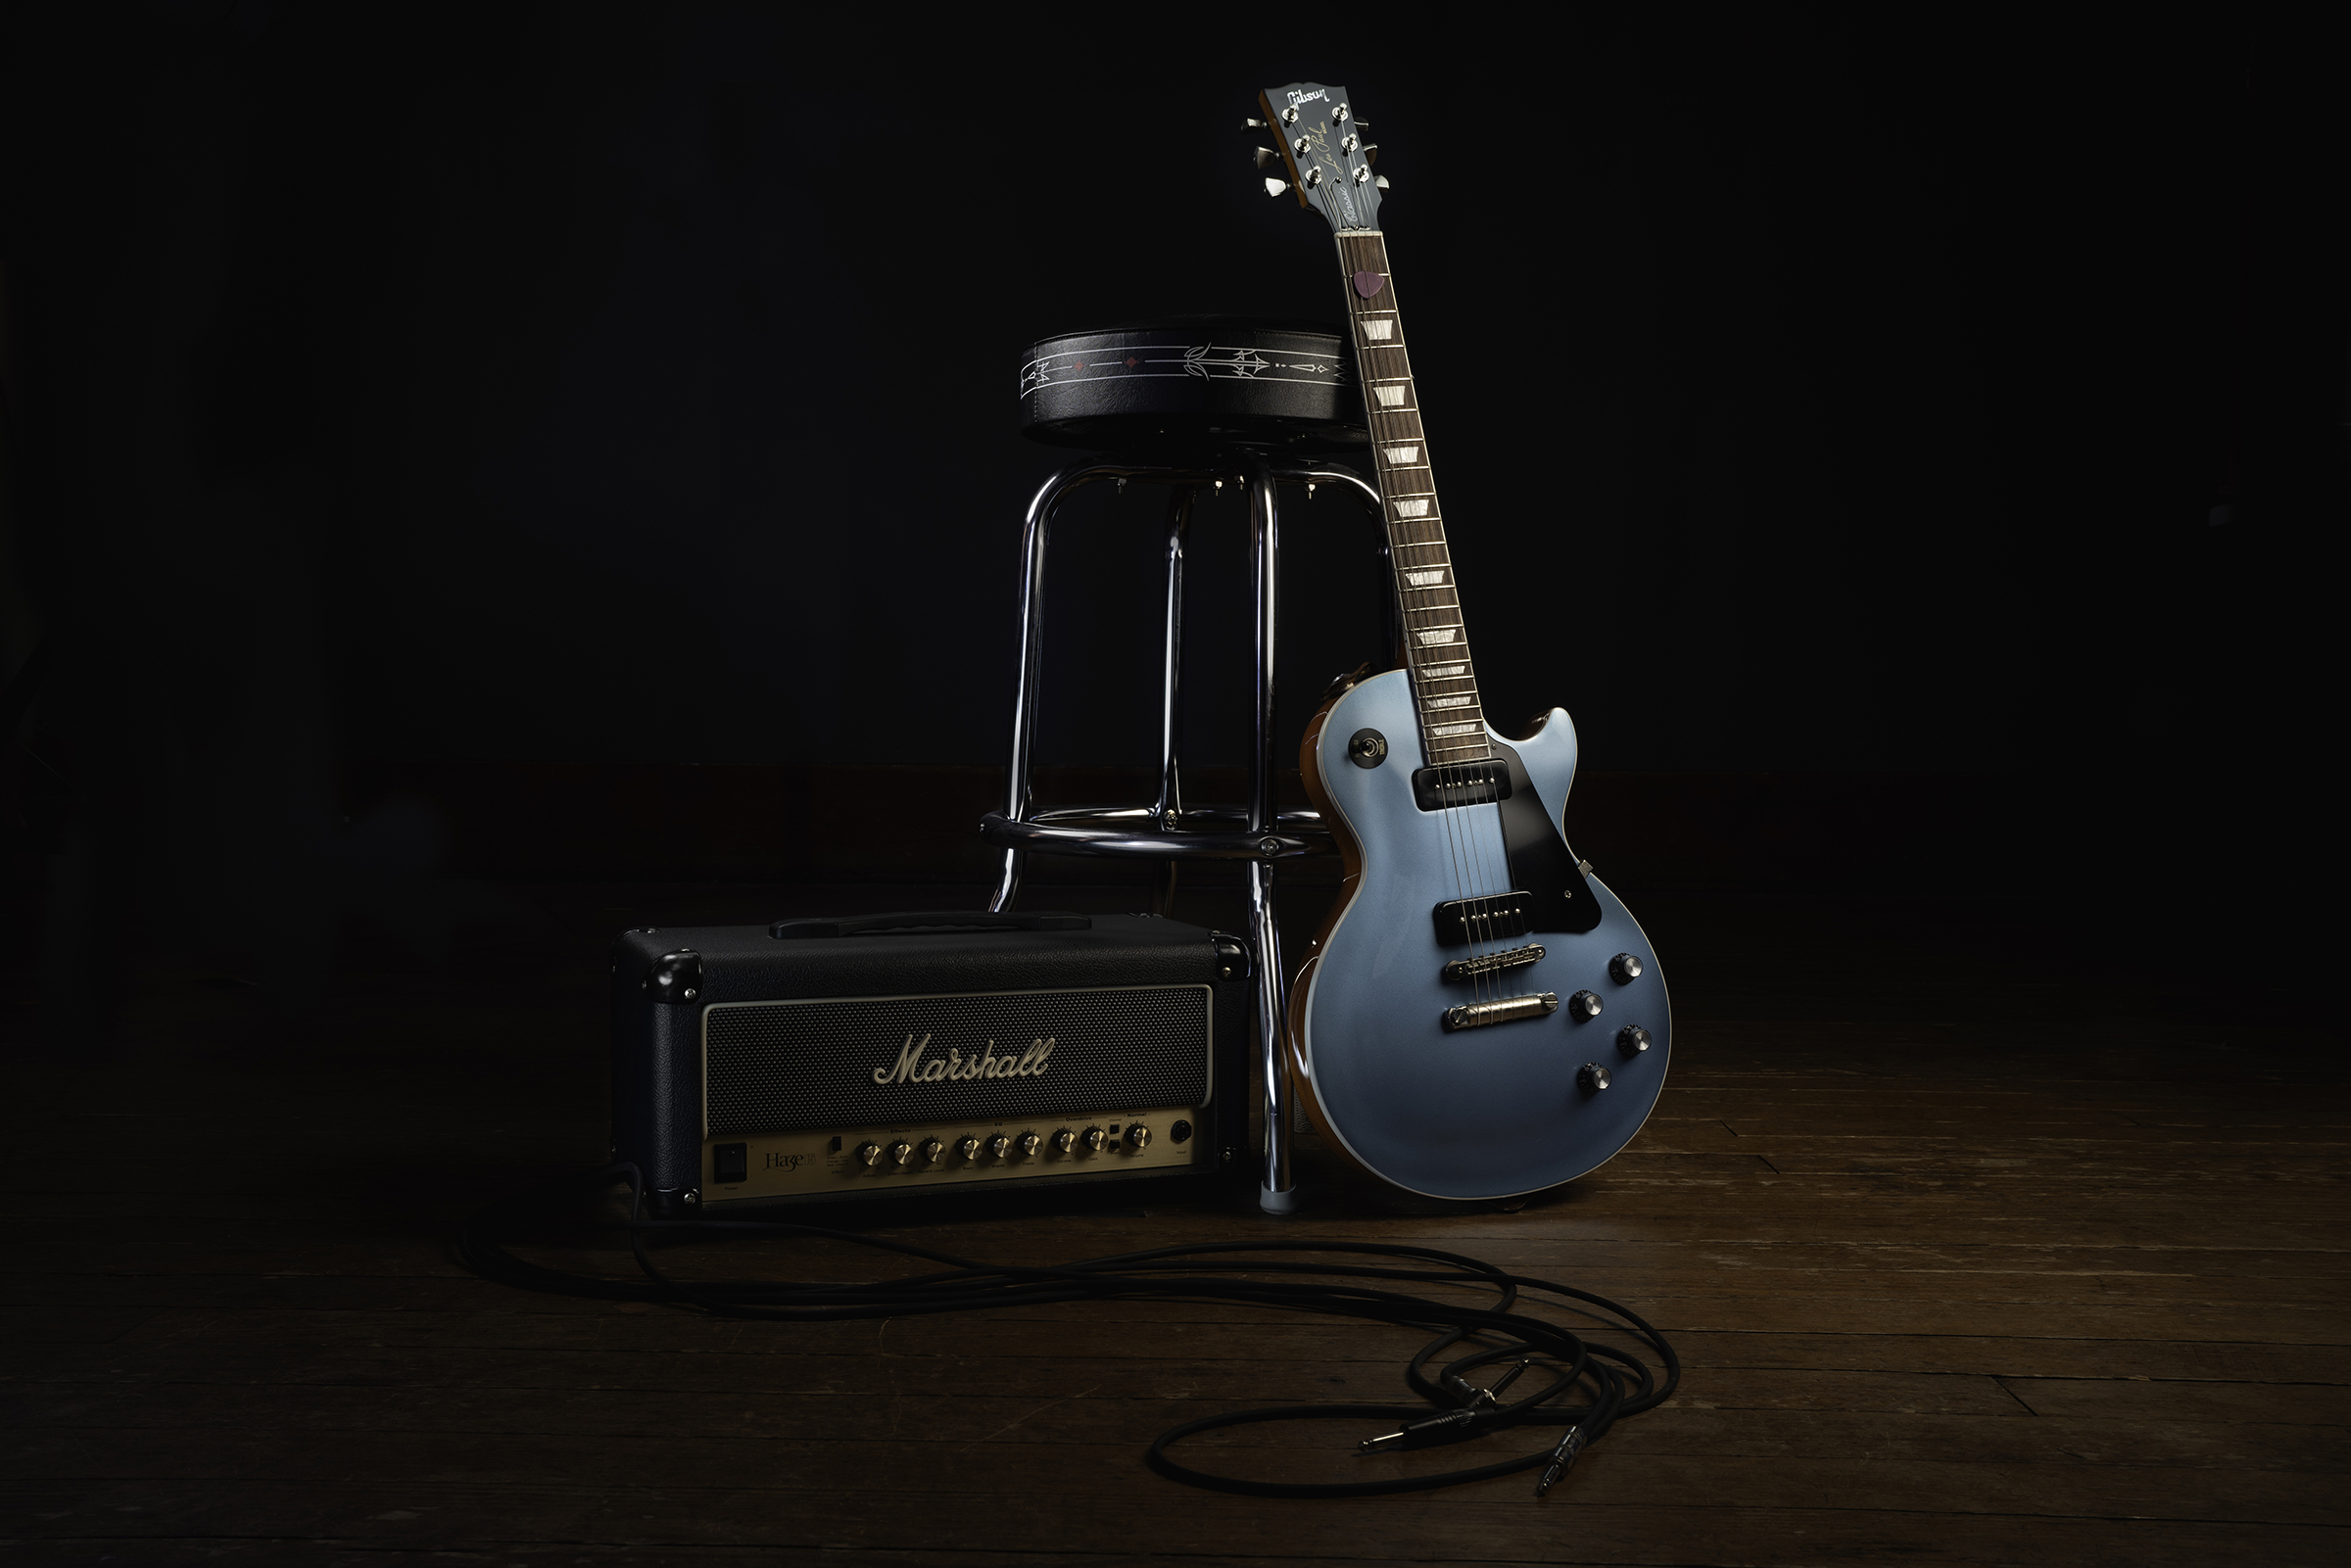 Gibson-guitar-blue-fender-amp-and stool-light-painted-photo-professional-commercial-photography-kelly-ann-photogrpahy-springboro-ohio-dayton-cincinnati-kelly-settle